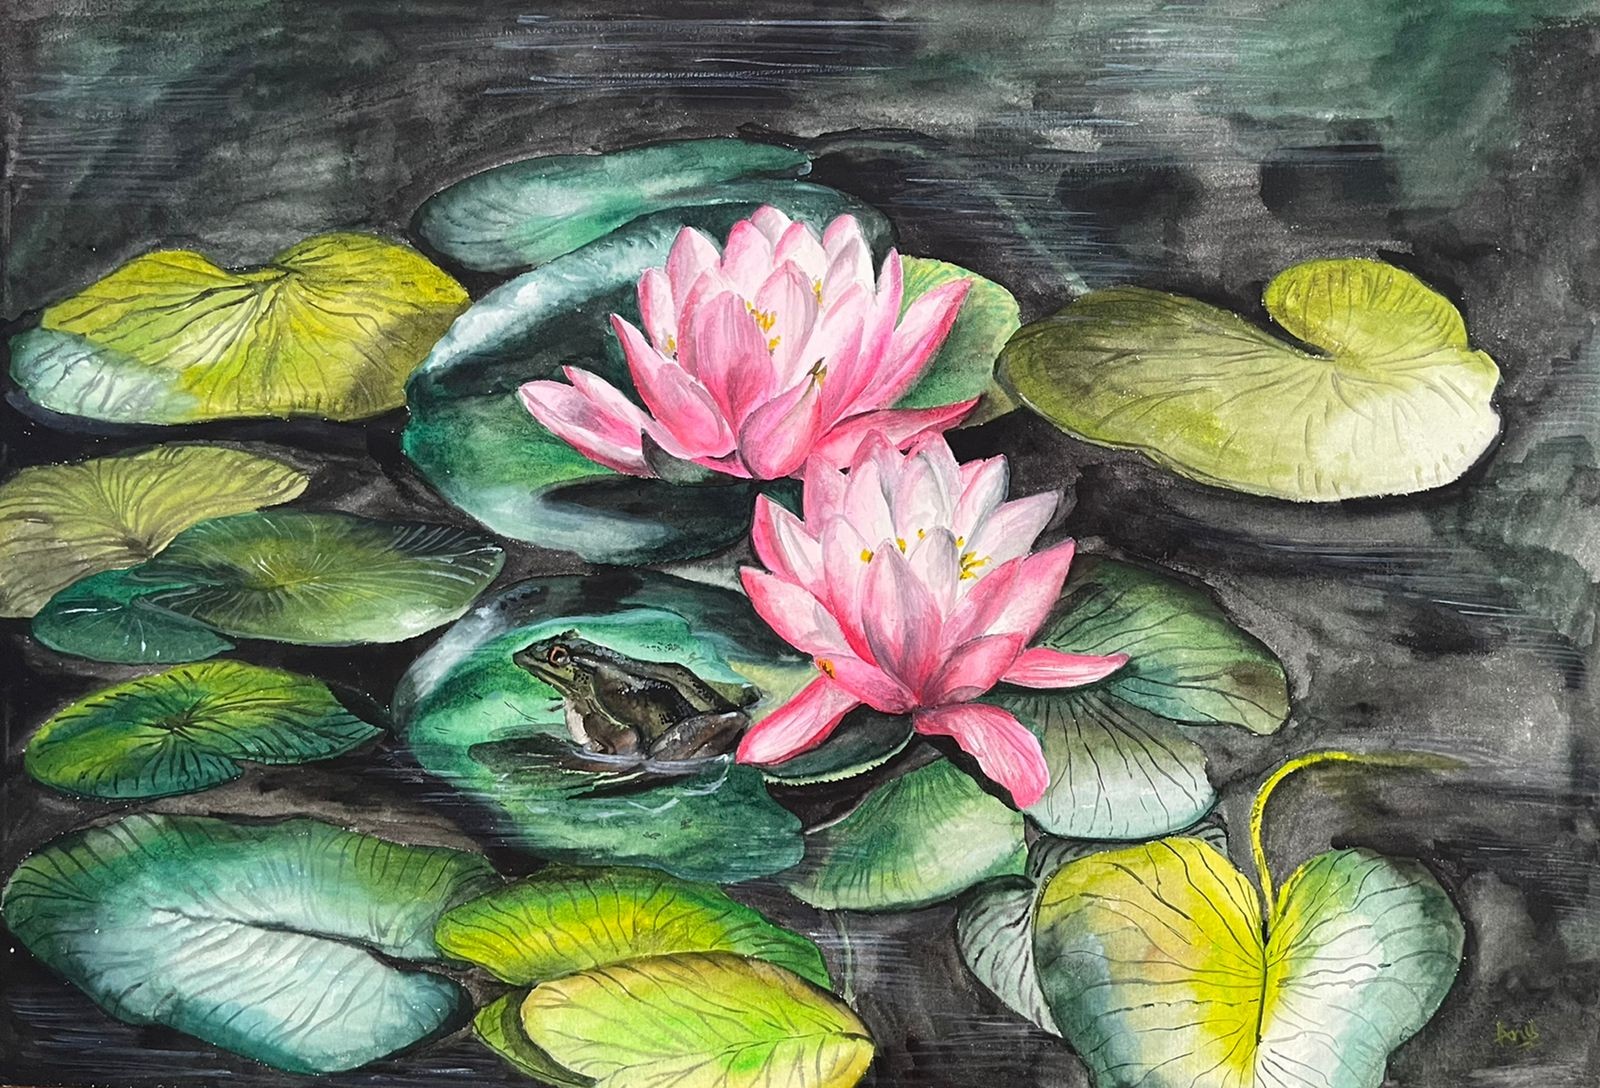 The Pond by Anusha Seermaran